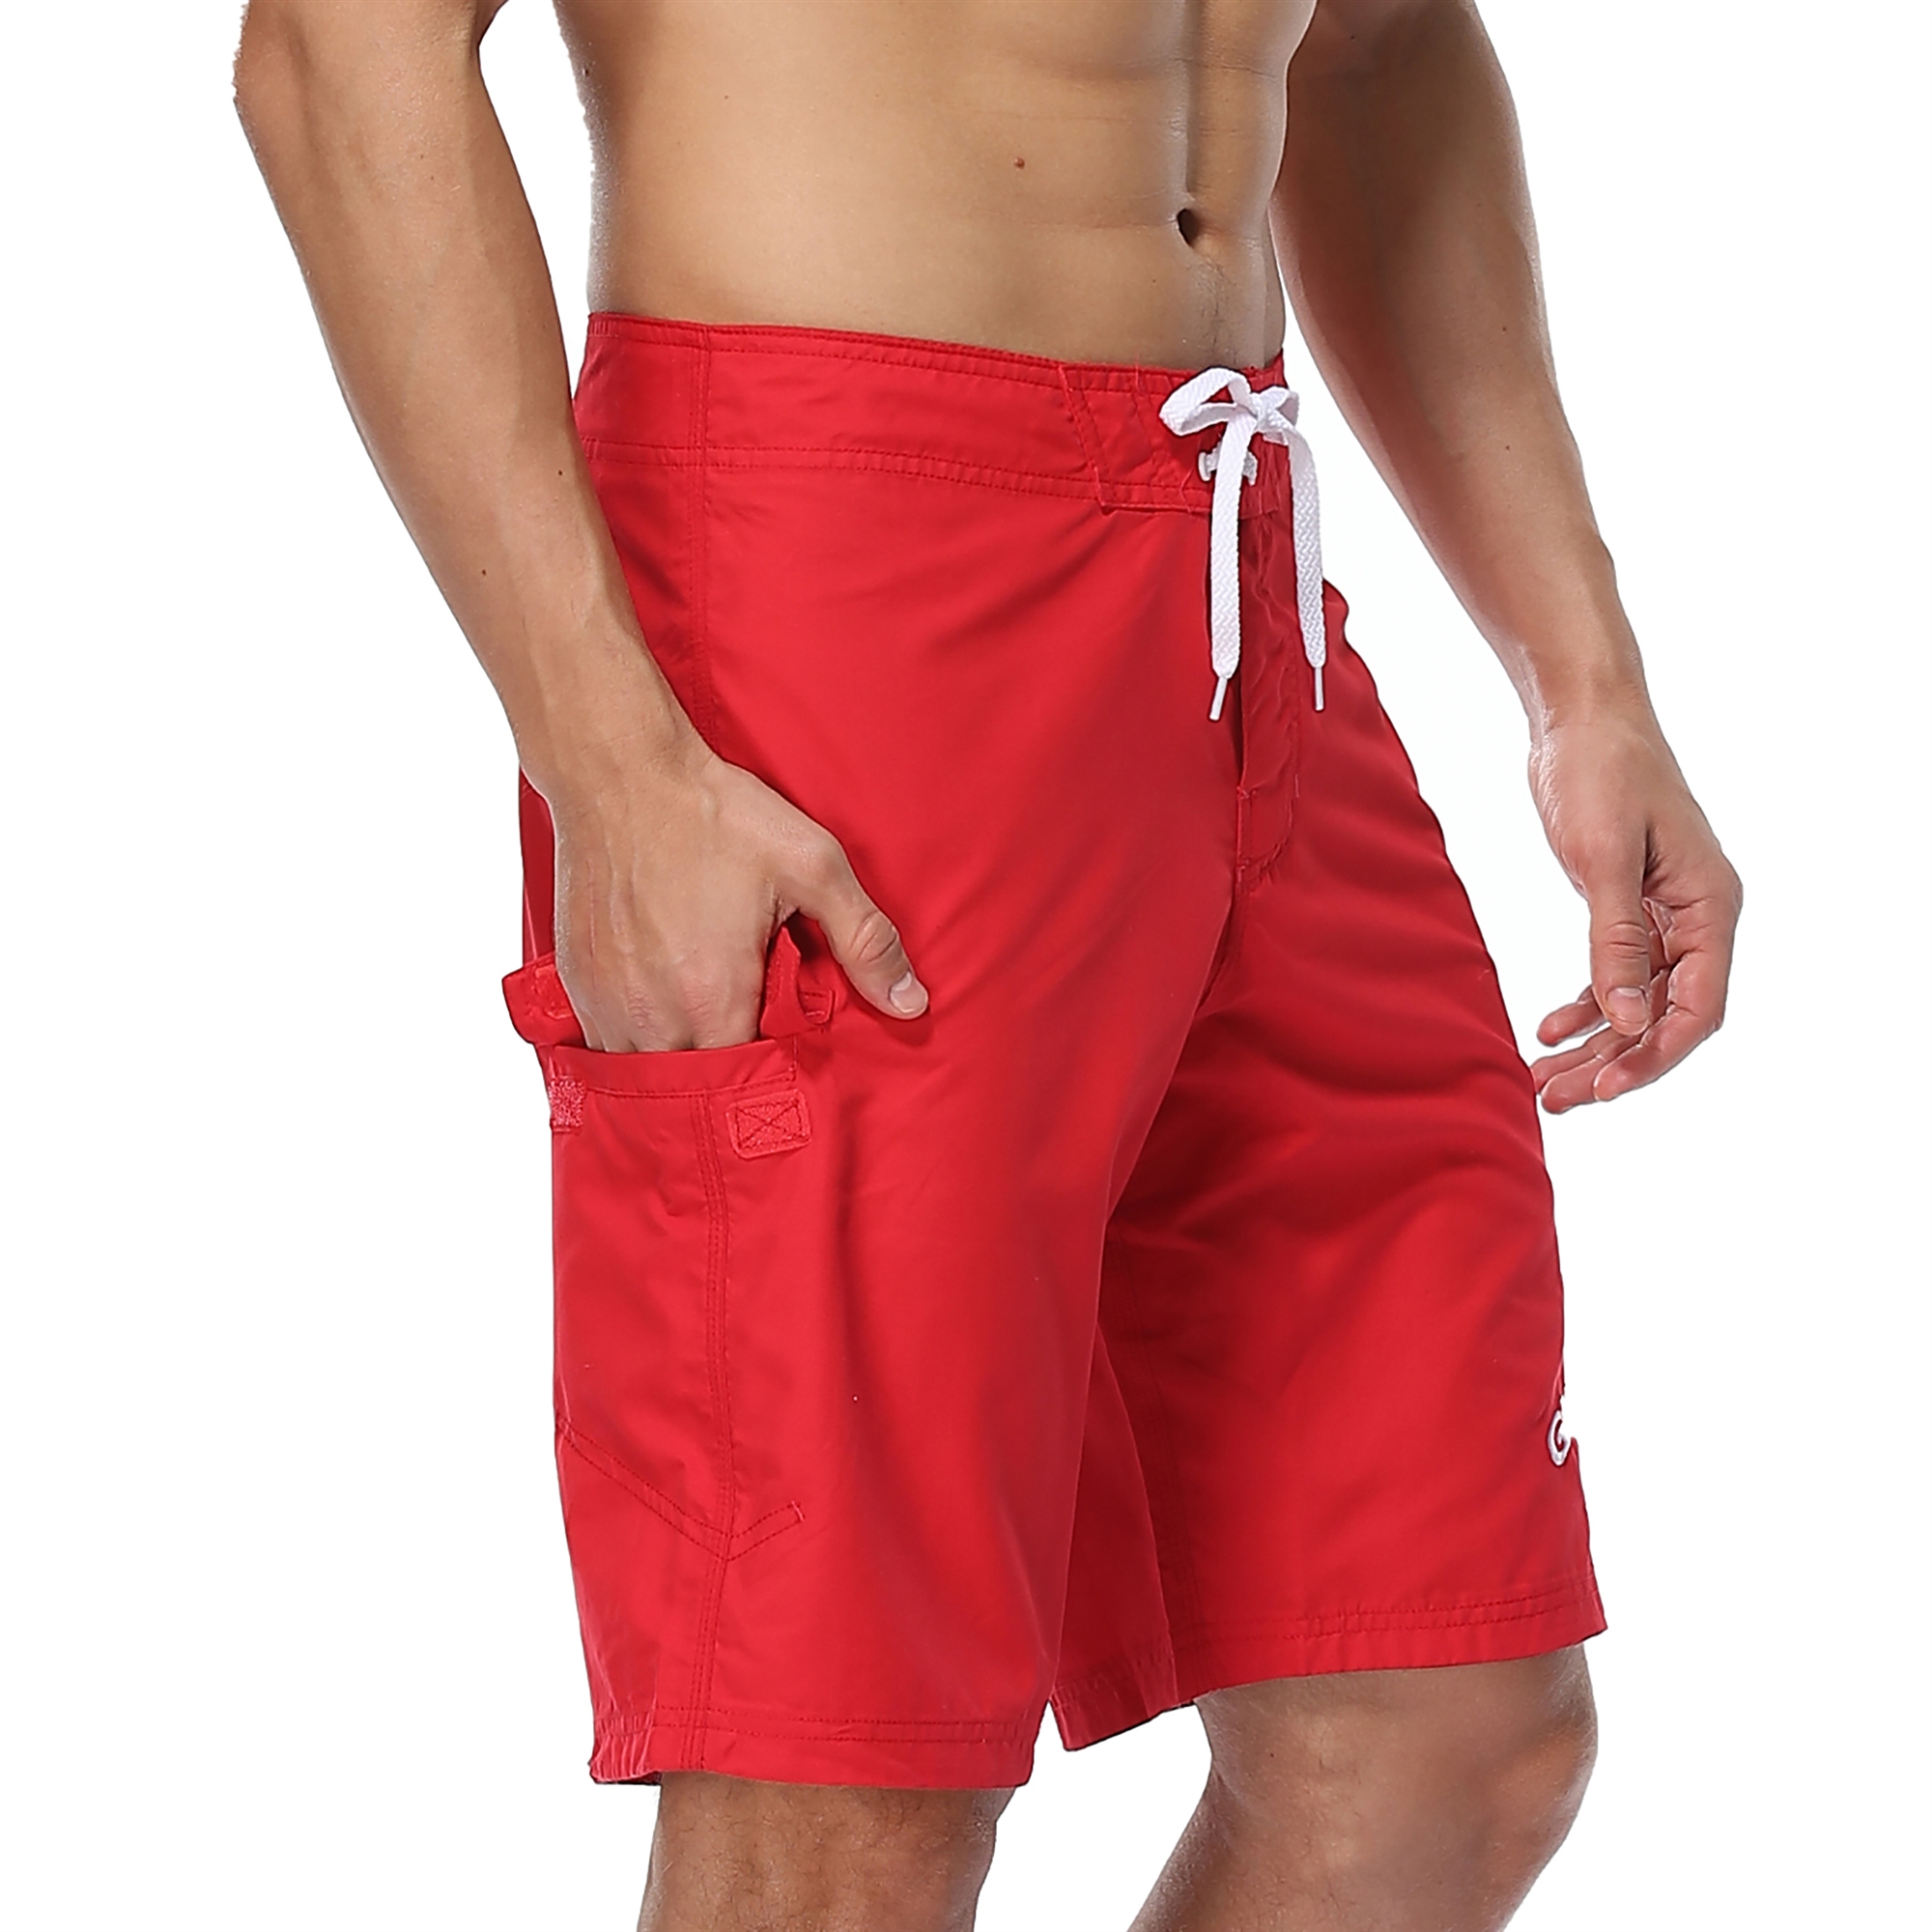 Adoretex Men's Guard Board Short Swimsuit (Adult)